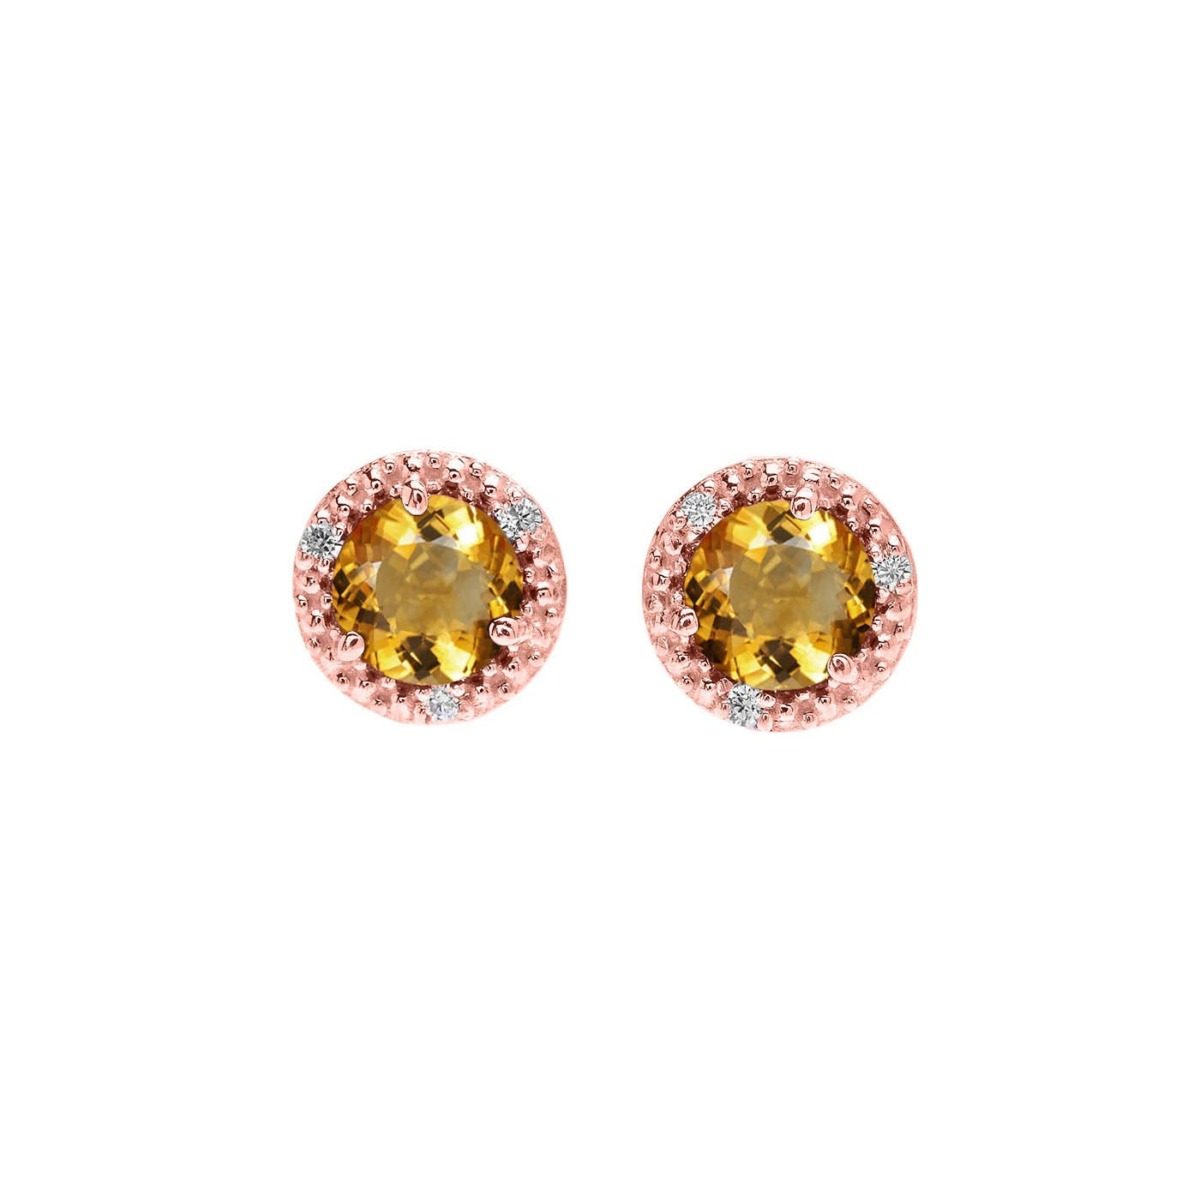 Gold Boutique - Men's Earrings in Rose GOOFASH